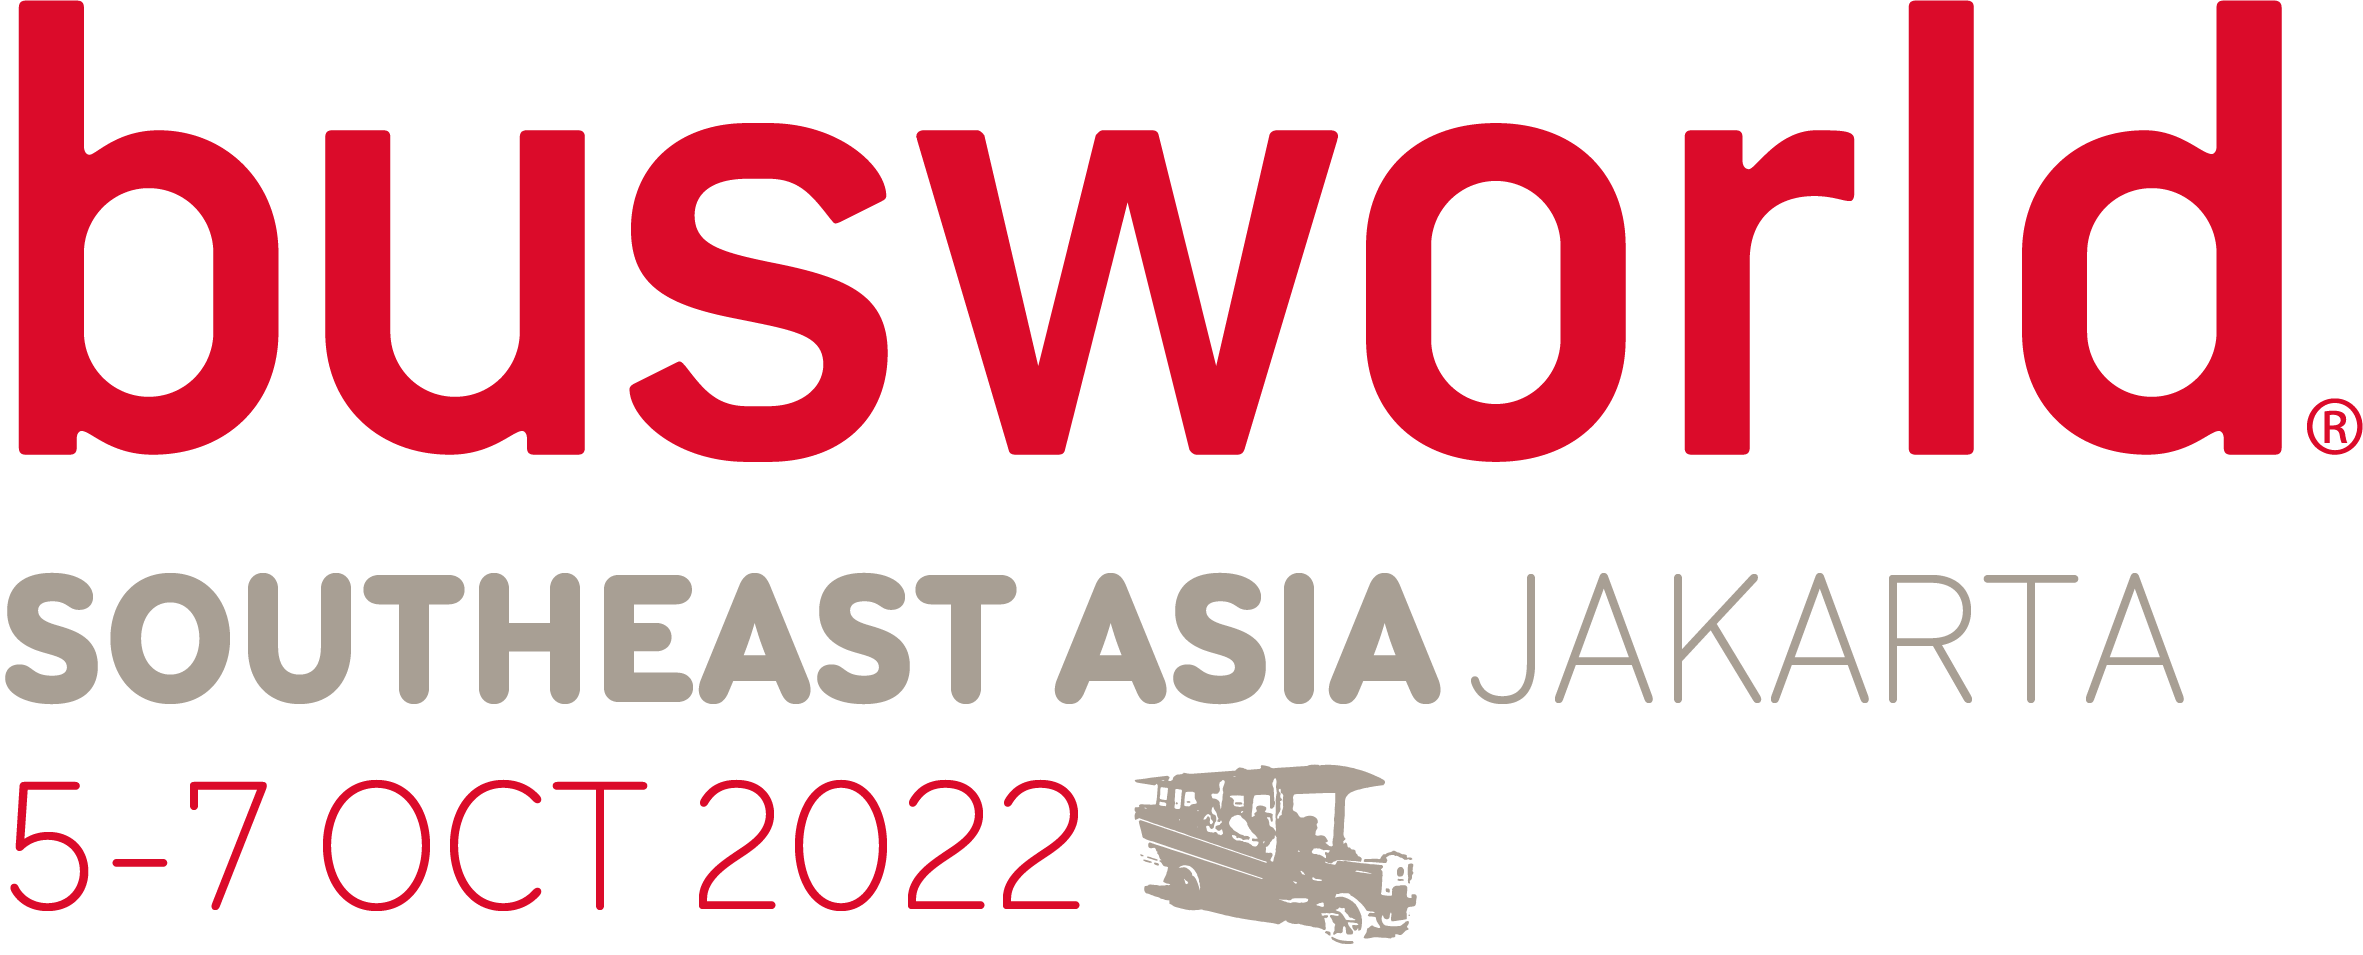 Busworld Southeast Asia 2022 logo